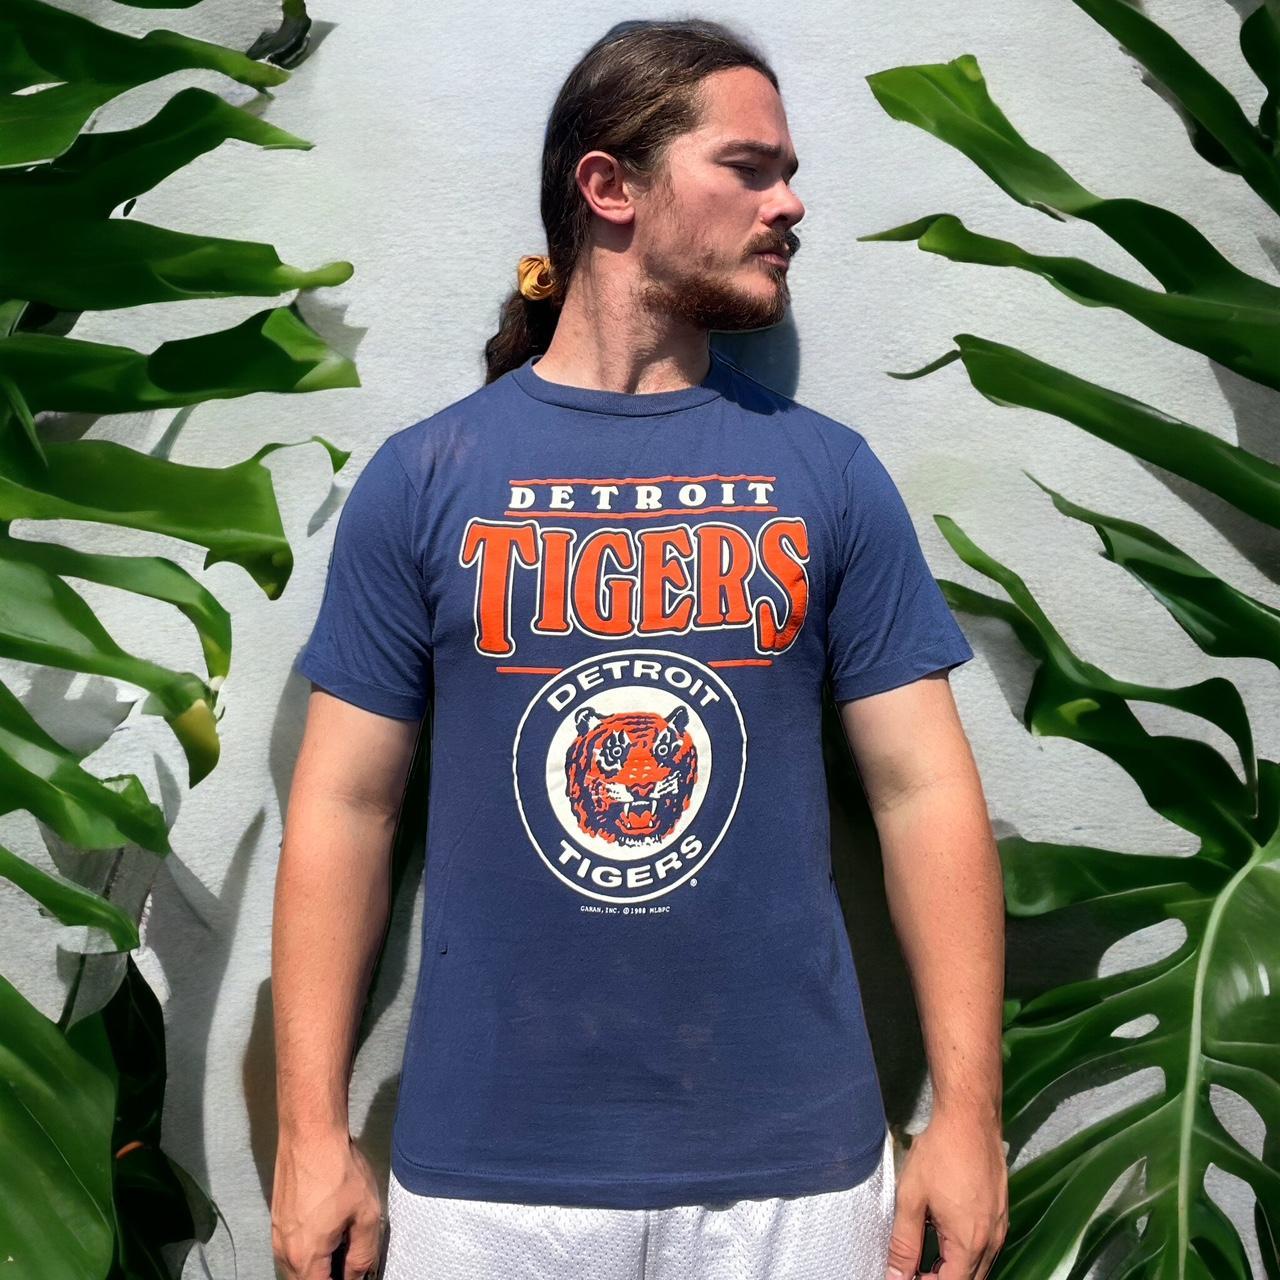 Vintage Detroit tigers t shirt large fits like medium - Depop